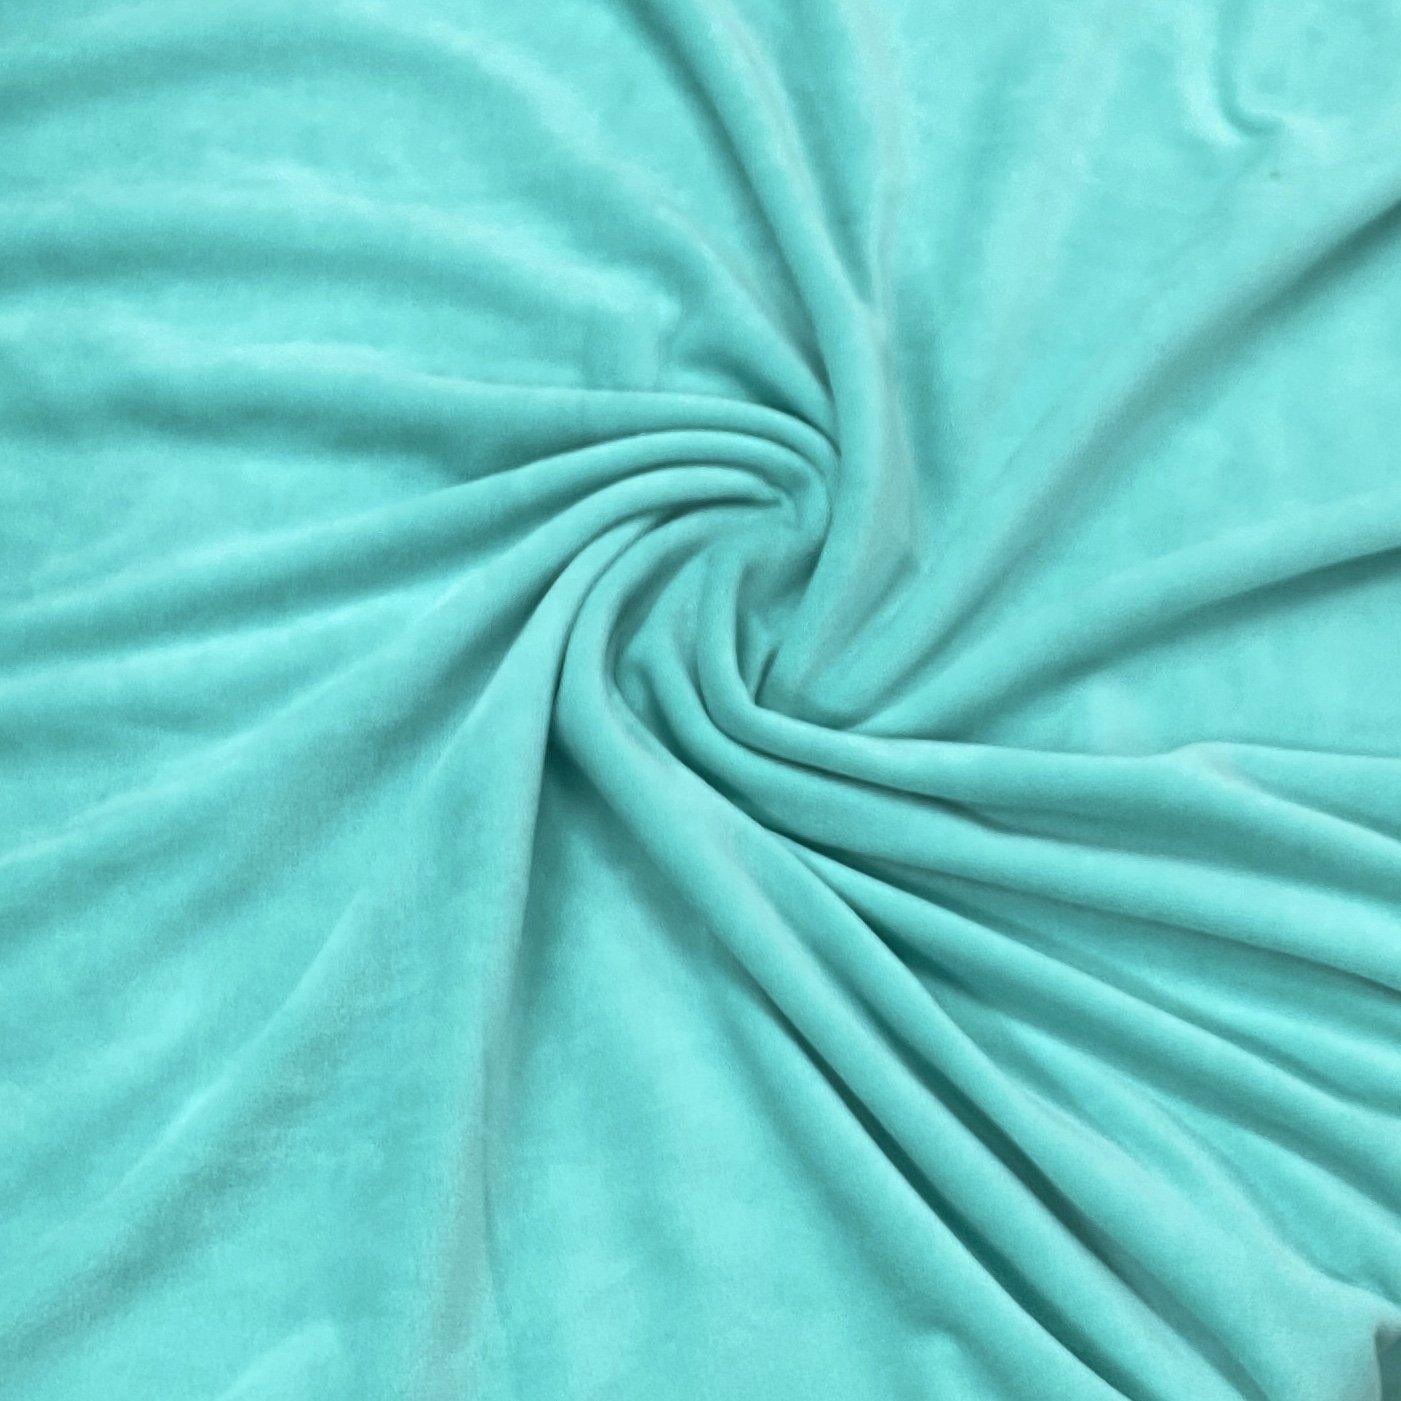 Spearmint Organic Cotton Velour Fabric, $10.59/yd, 15 yards - Nature's Fabrics